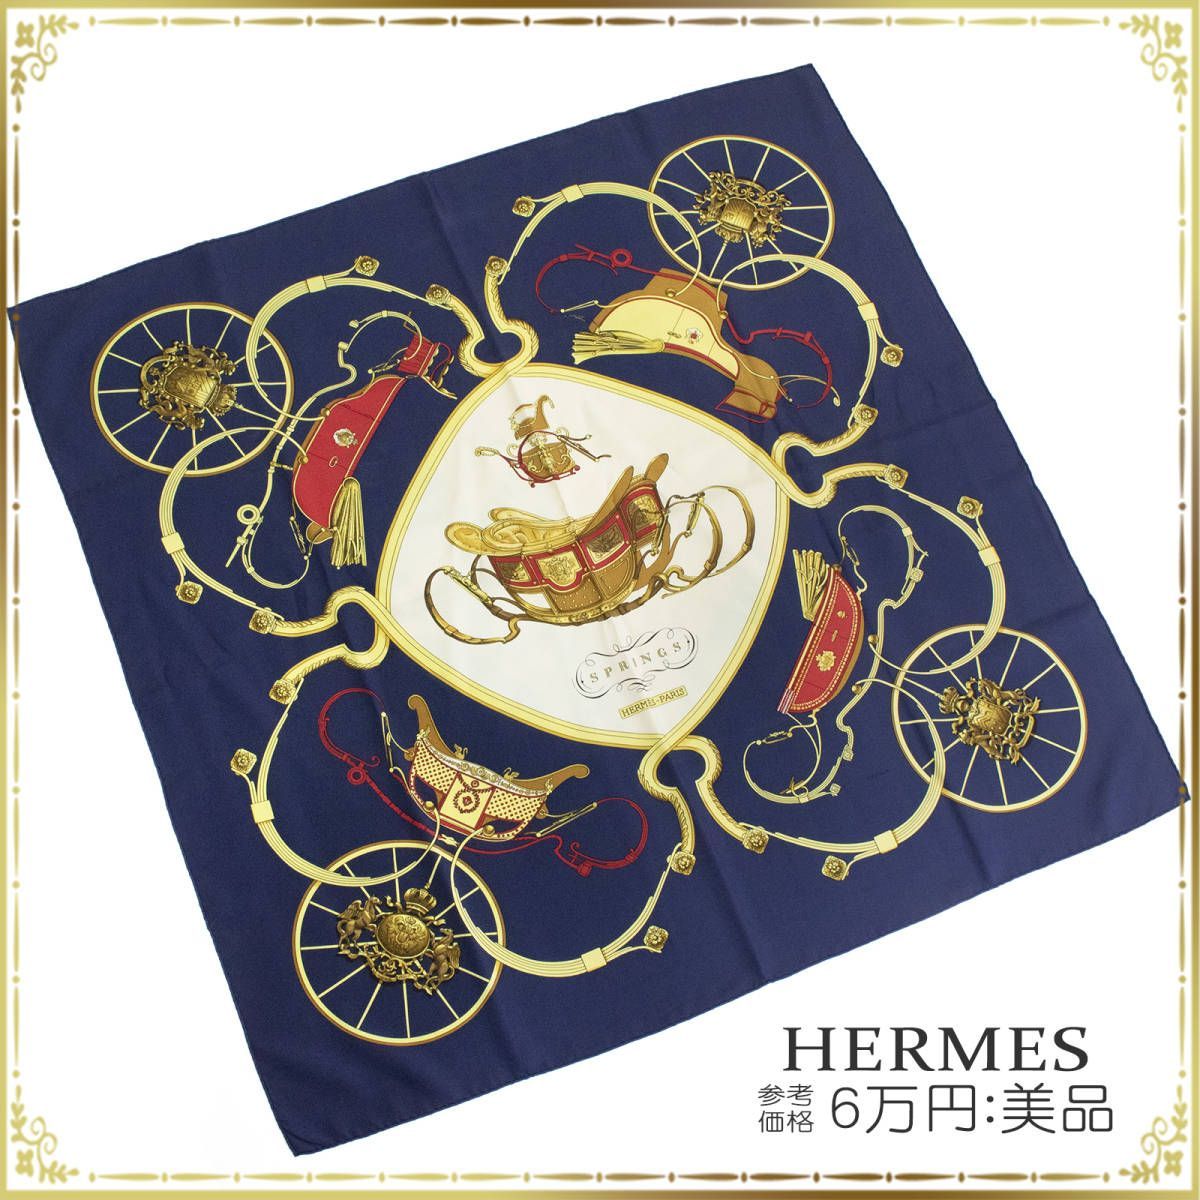 HERMES エルメスのスカーフ カレ90 スプリングス(SPRINGS) 美品 正規品 レディース 綺麗 大判 ヴィンテージ 希少 ネイビー  アイボリー - メルカリ